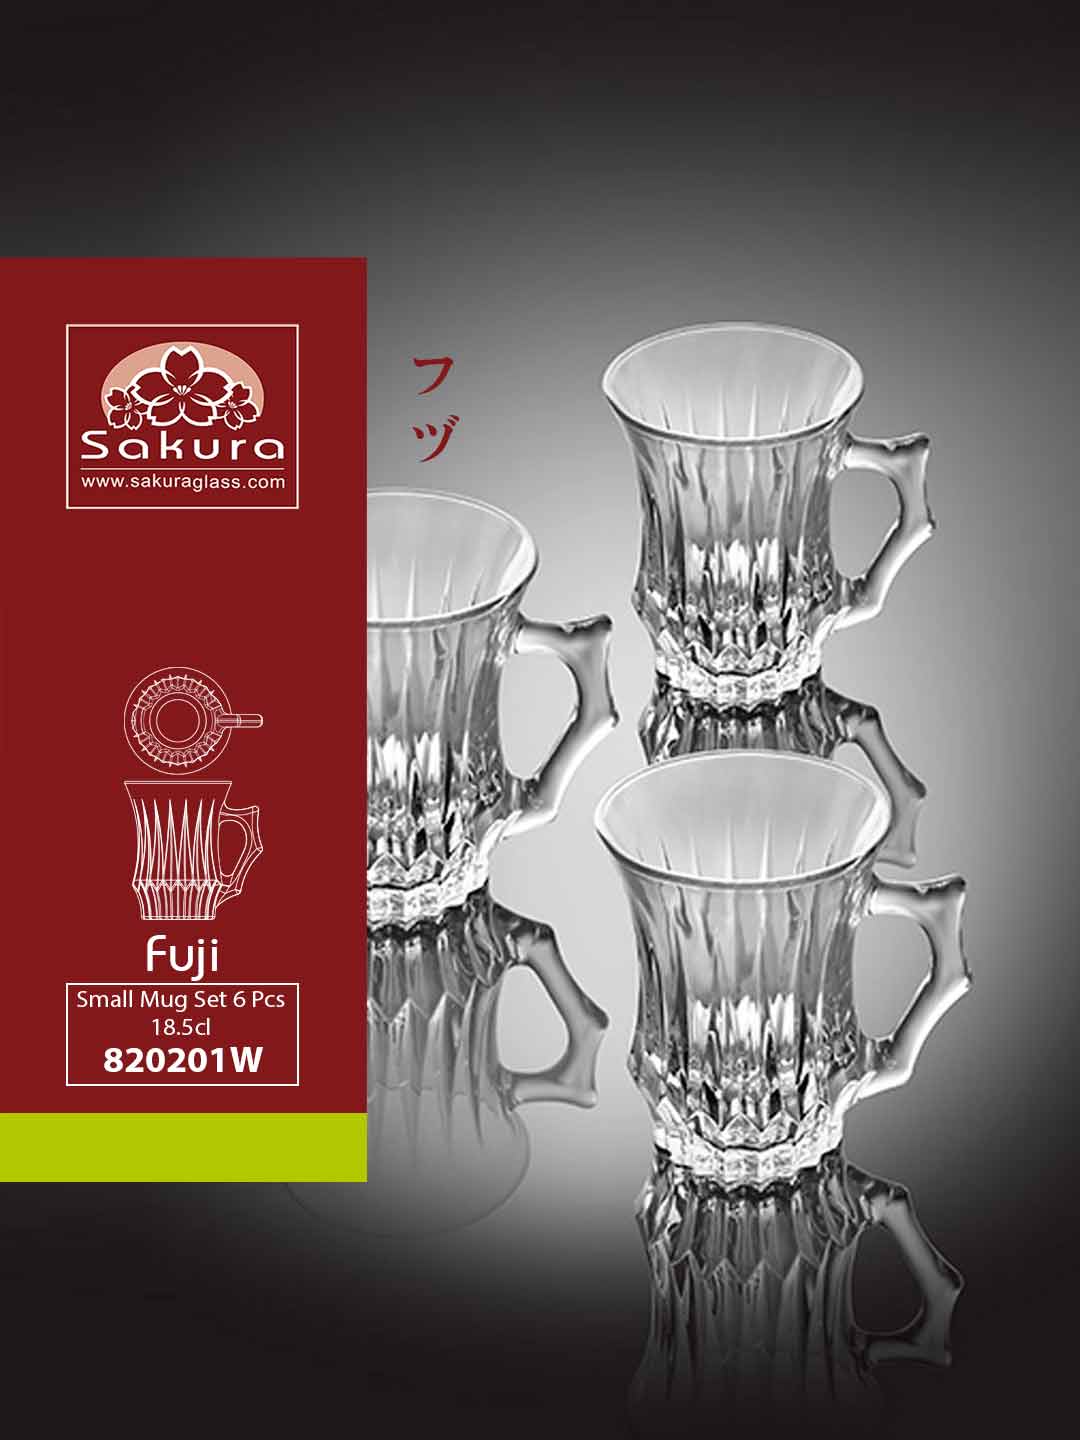 Sakura Product Fuji Small Mug Set 6 Pcs 18.5cl 820201W